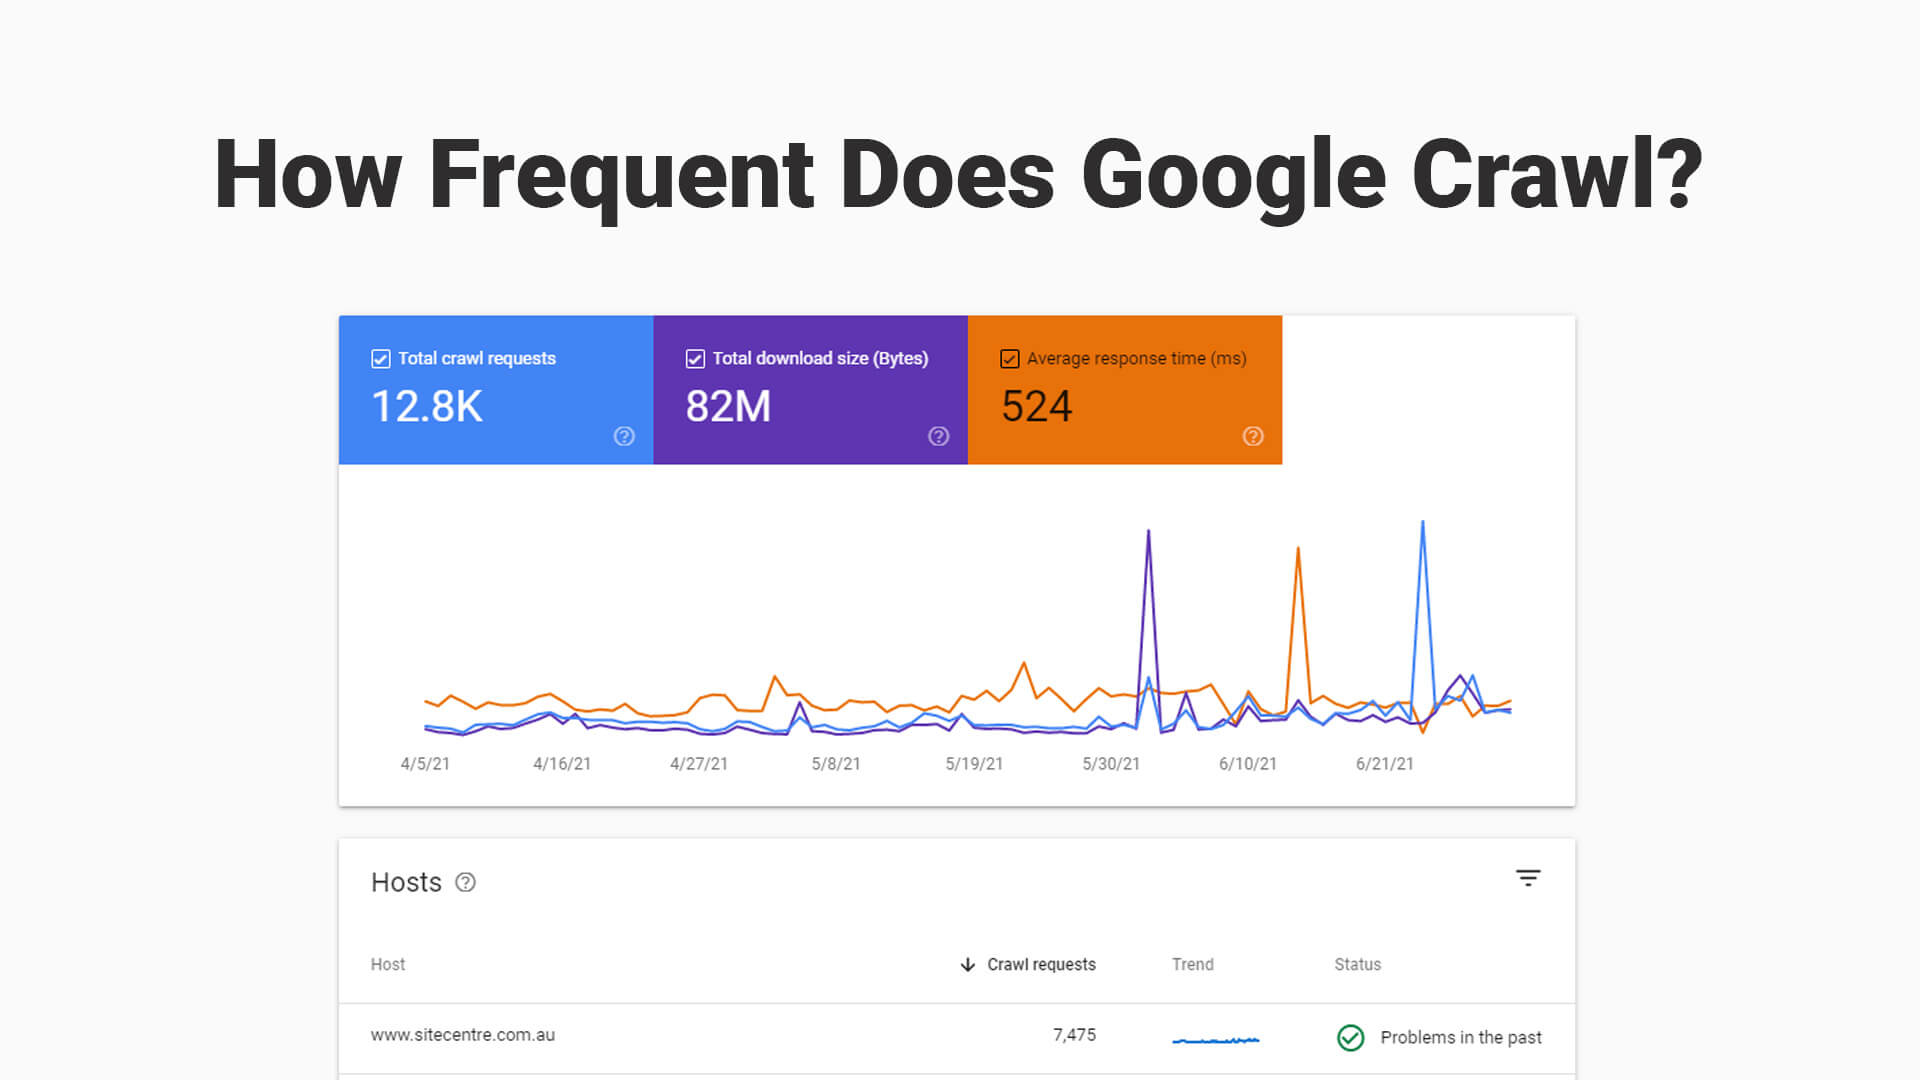 How often does Google crawl?